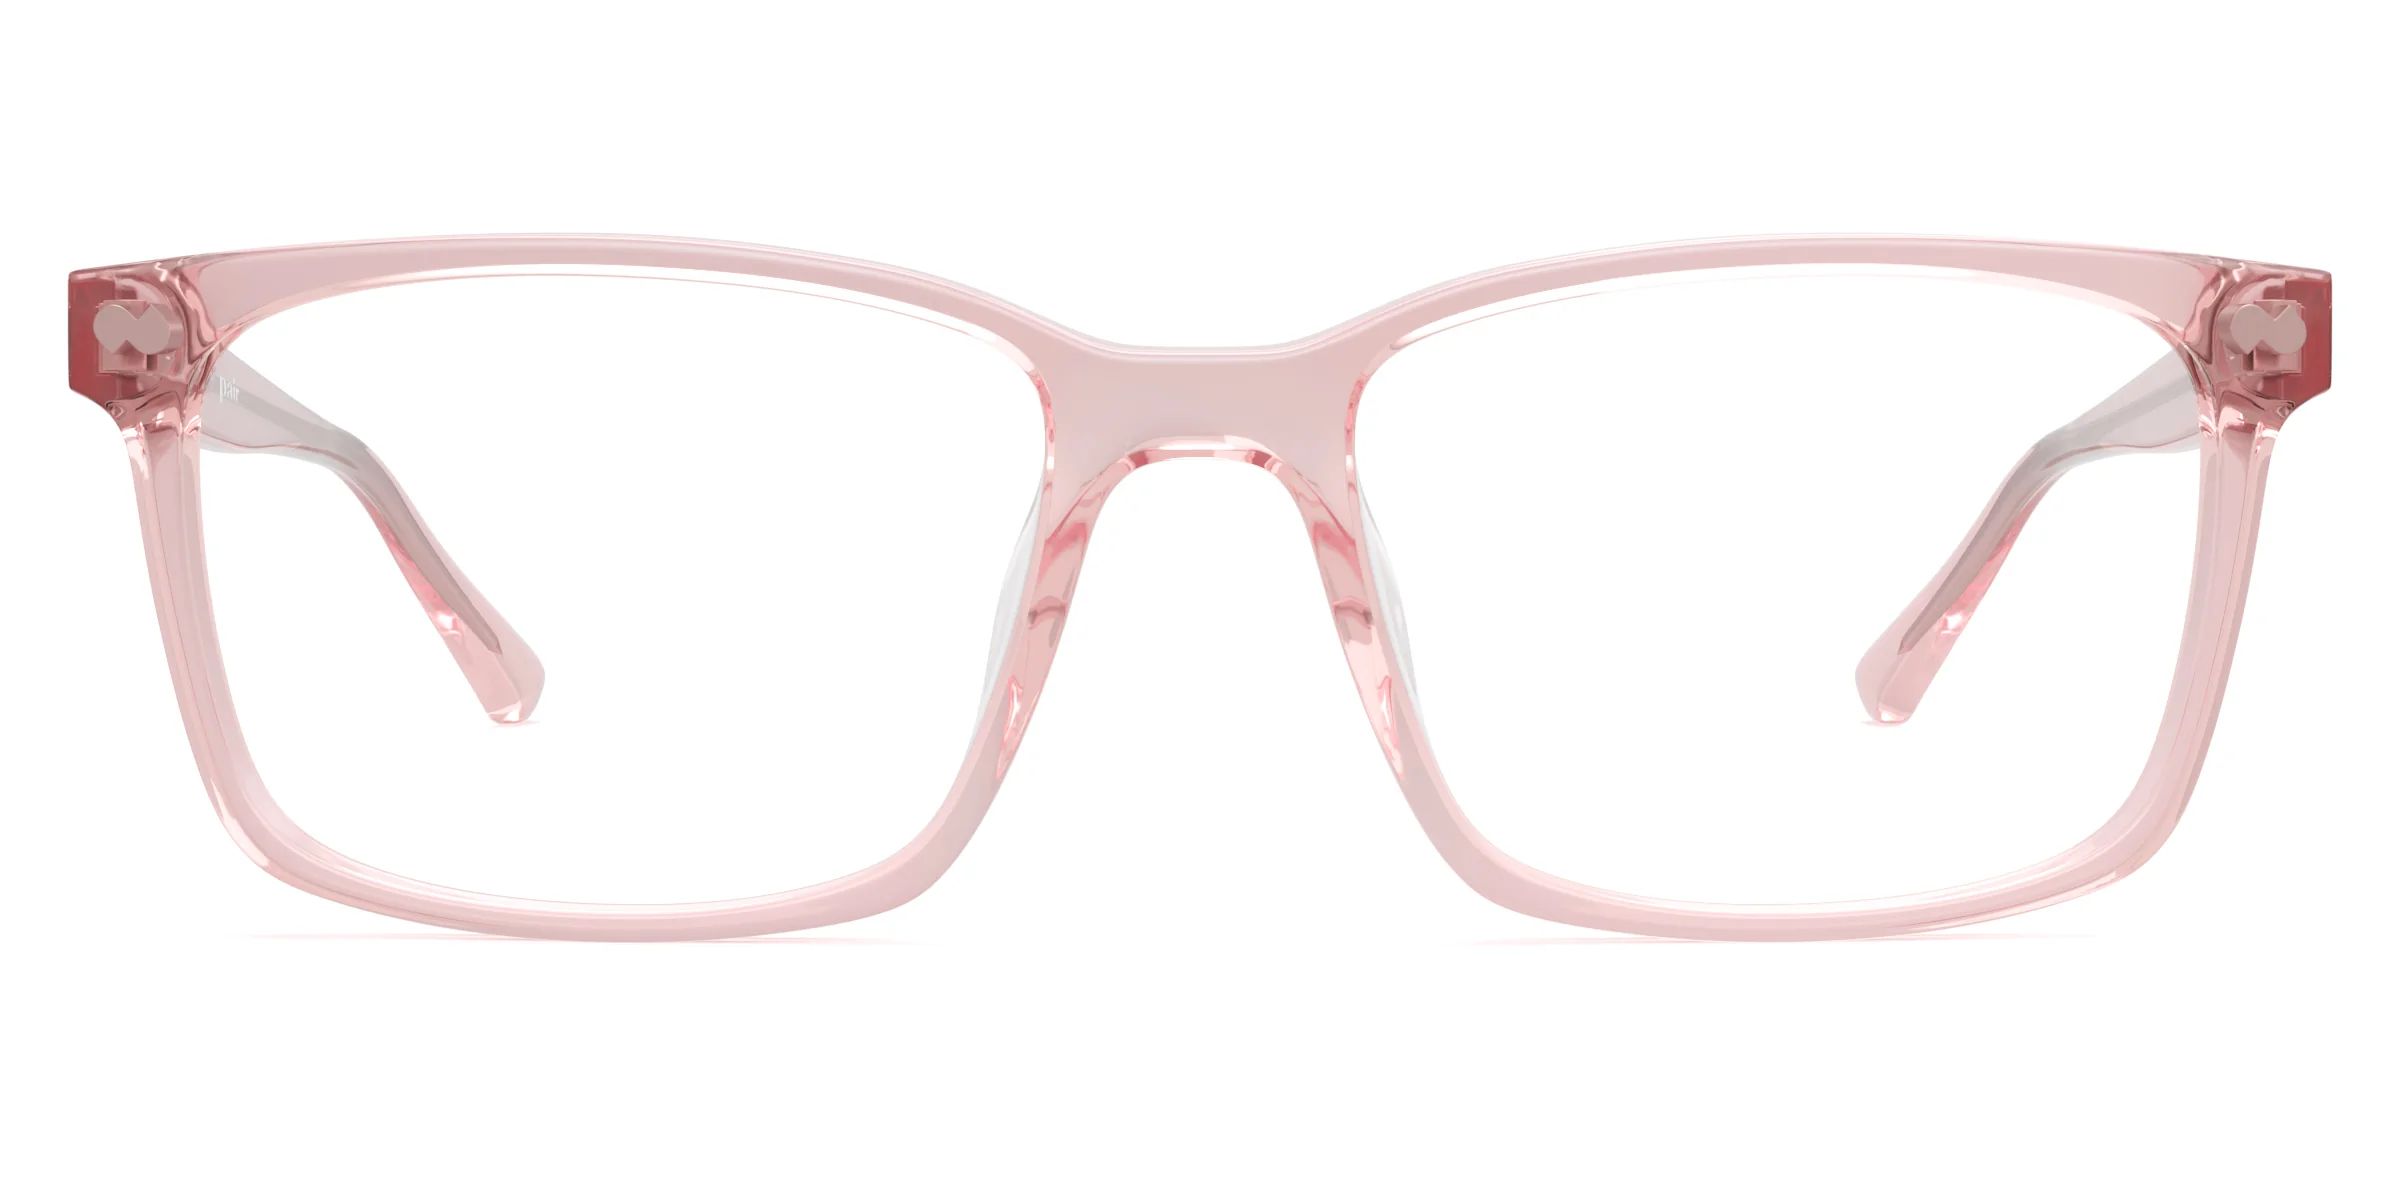 The Kirby | Pair Eyewear